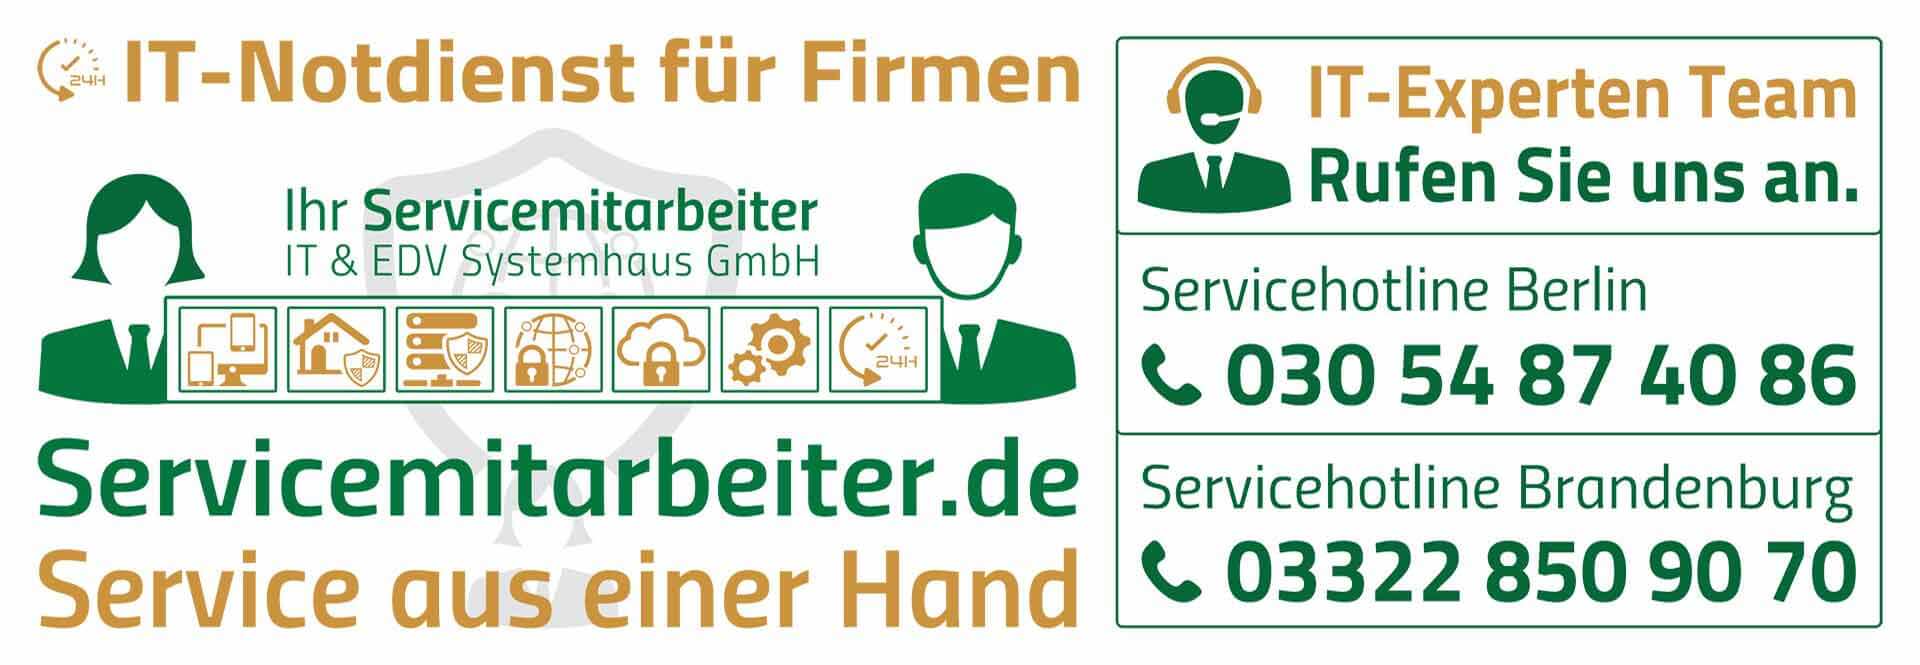 IT Service Berlin - Servicemitarbeiter - IT & EDV Systemhaus